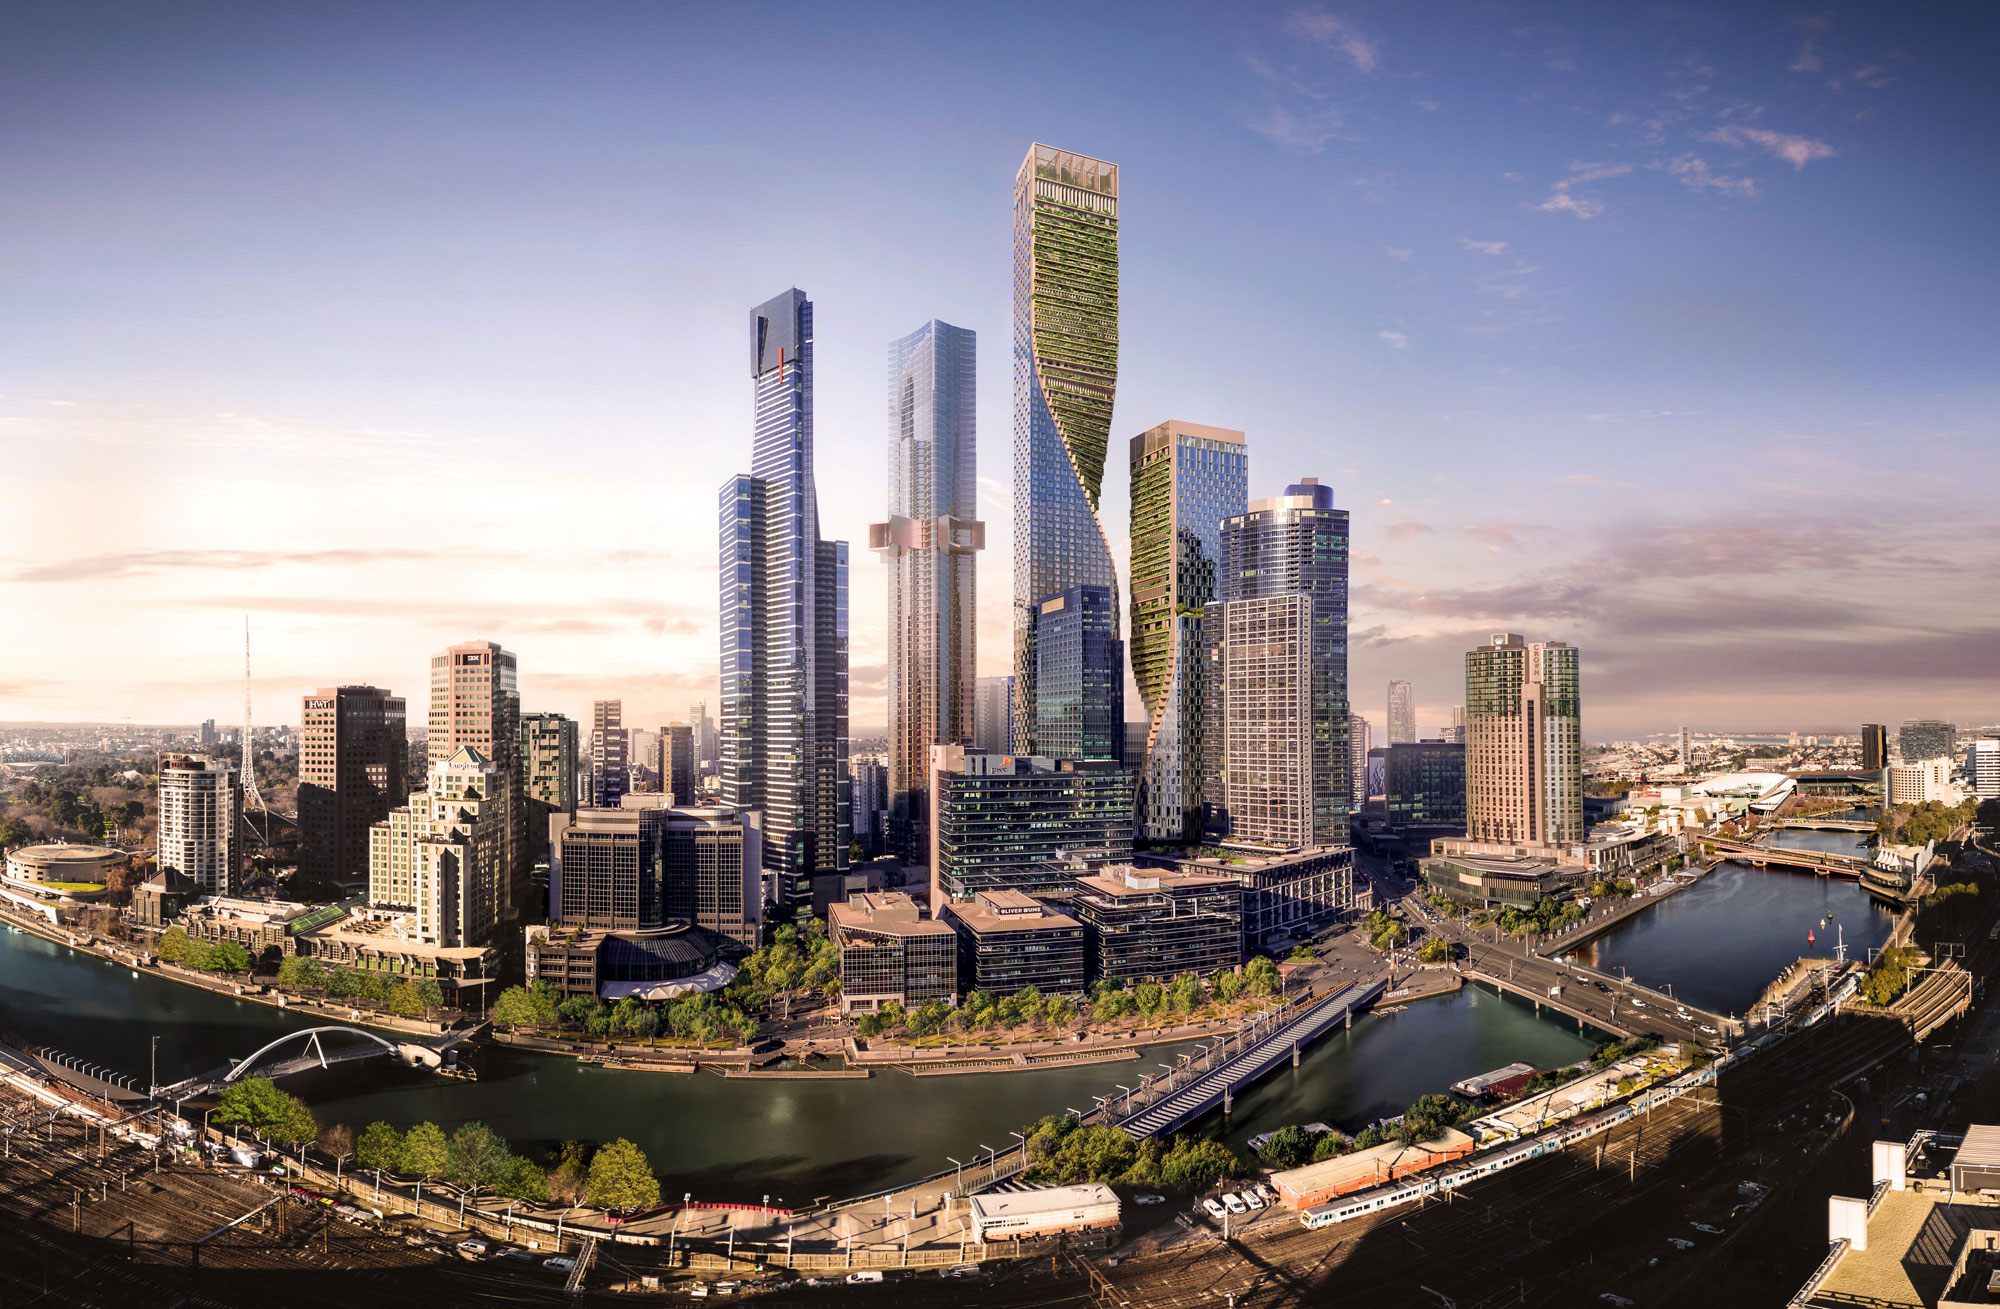 rendering of an in-development skyscraper in Melbourne, Southbank by Beulah development